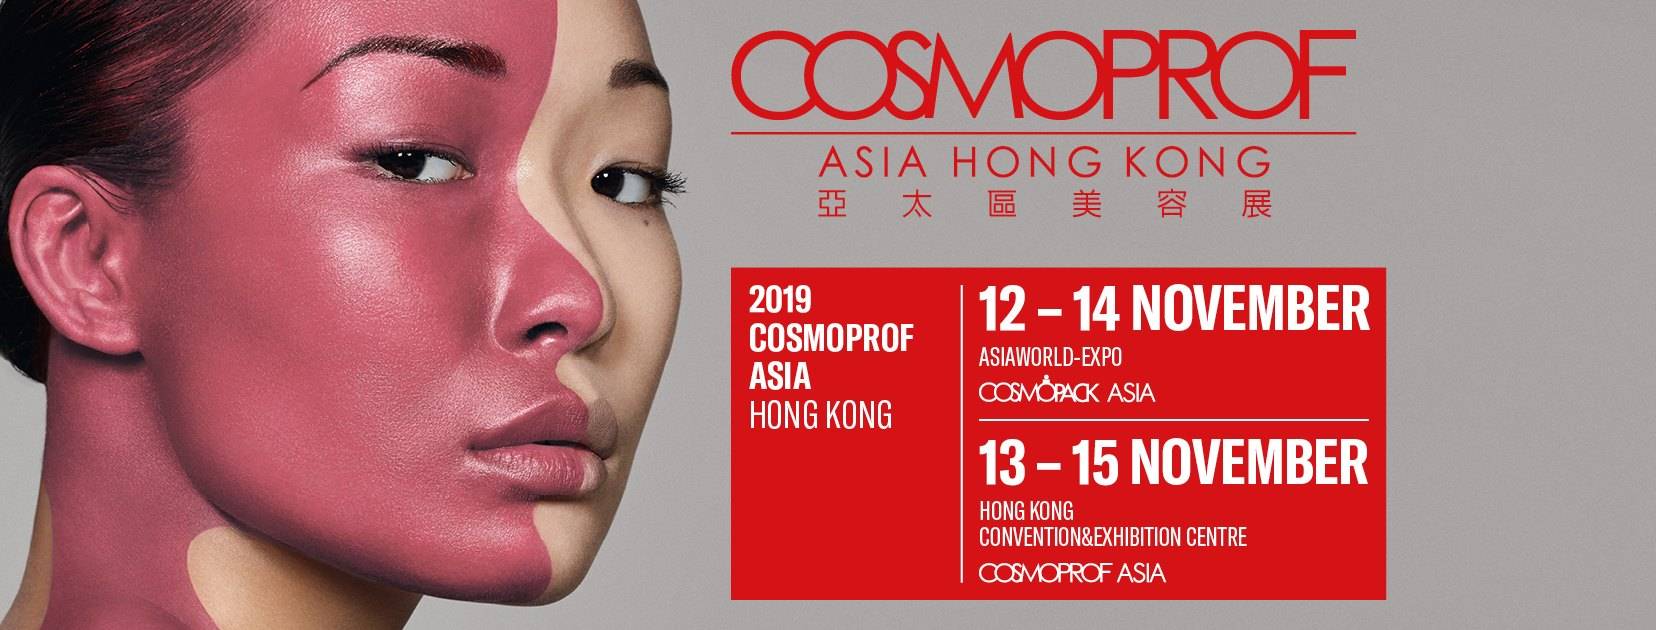 2019 CosmoprofAsia